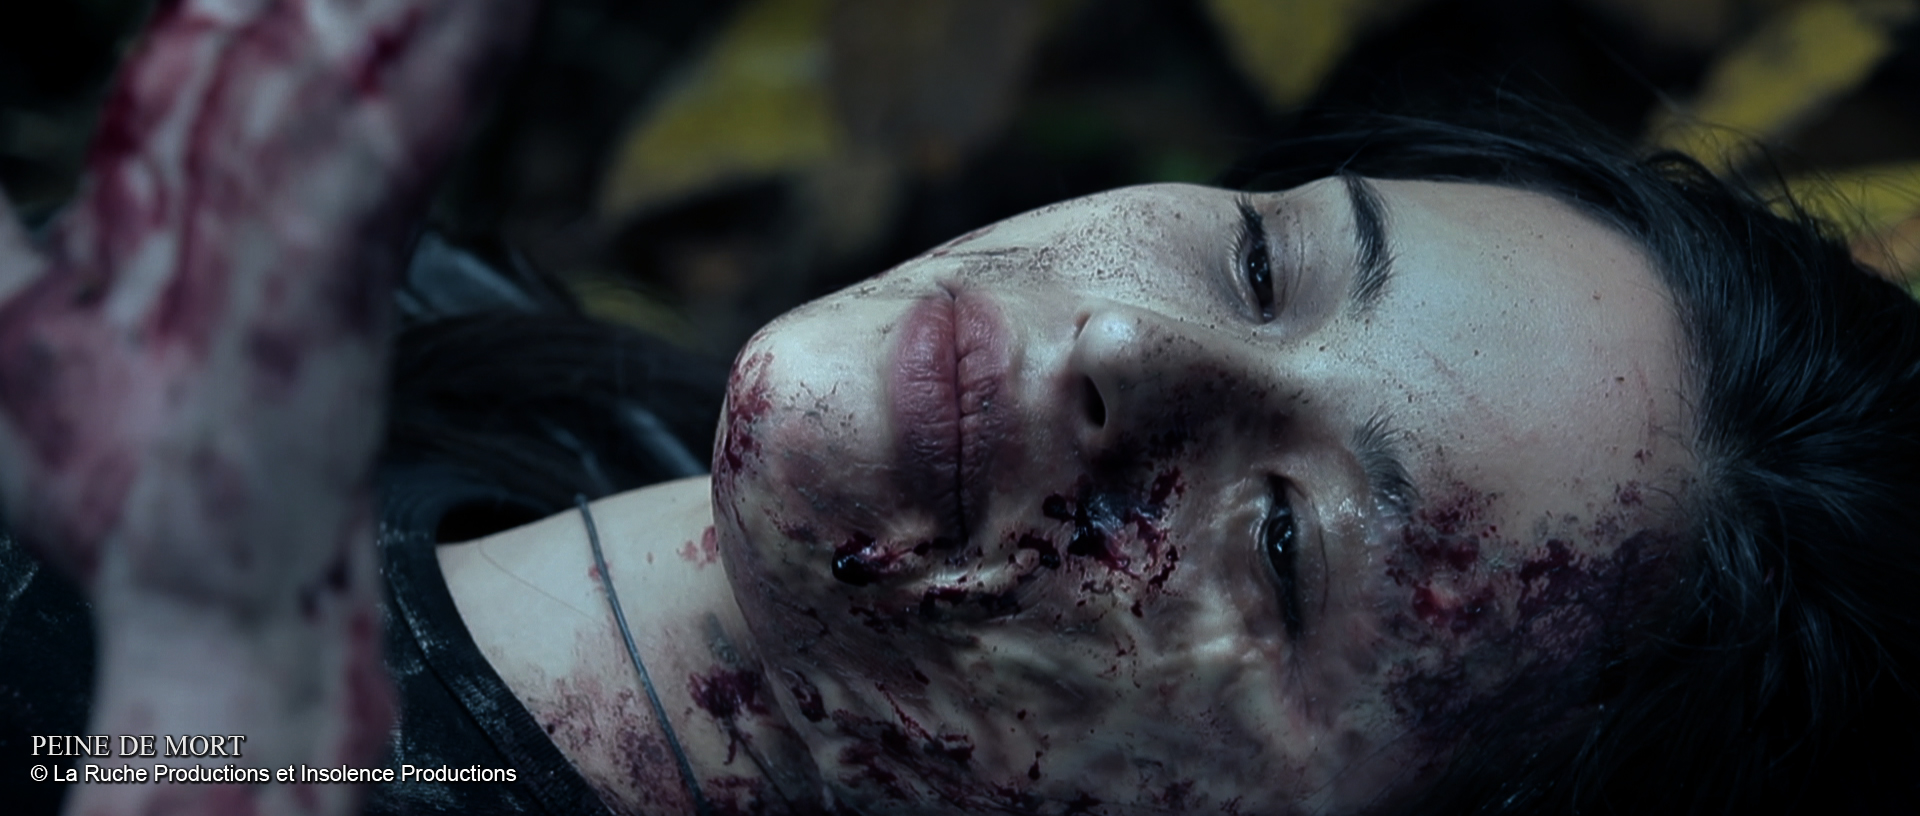 Peine de mort (2013) Screenshot 1